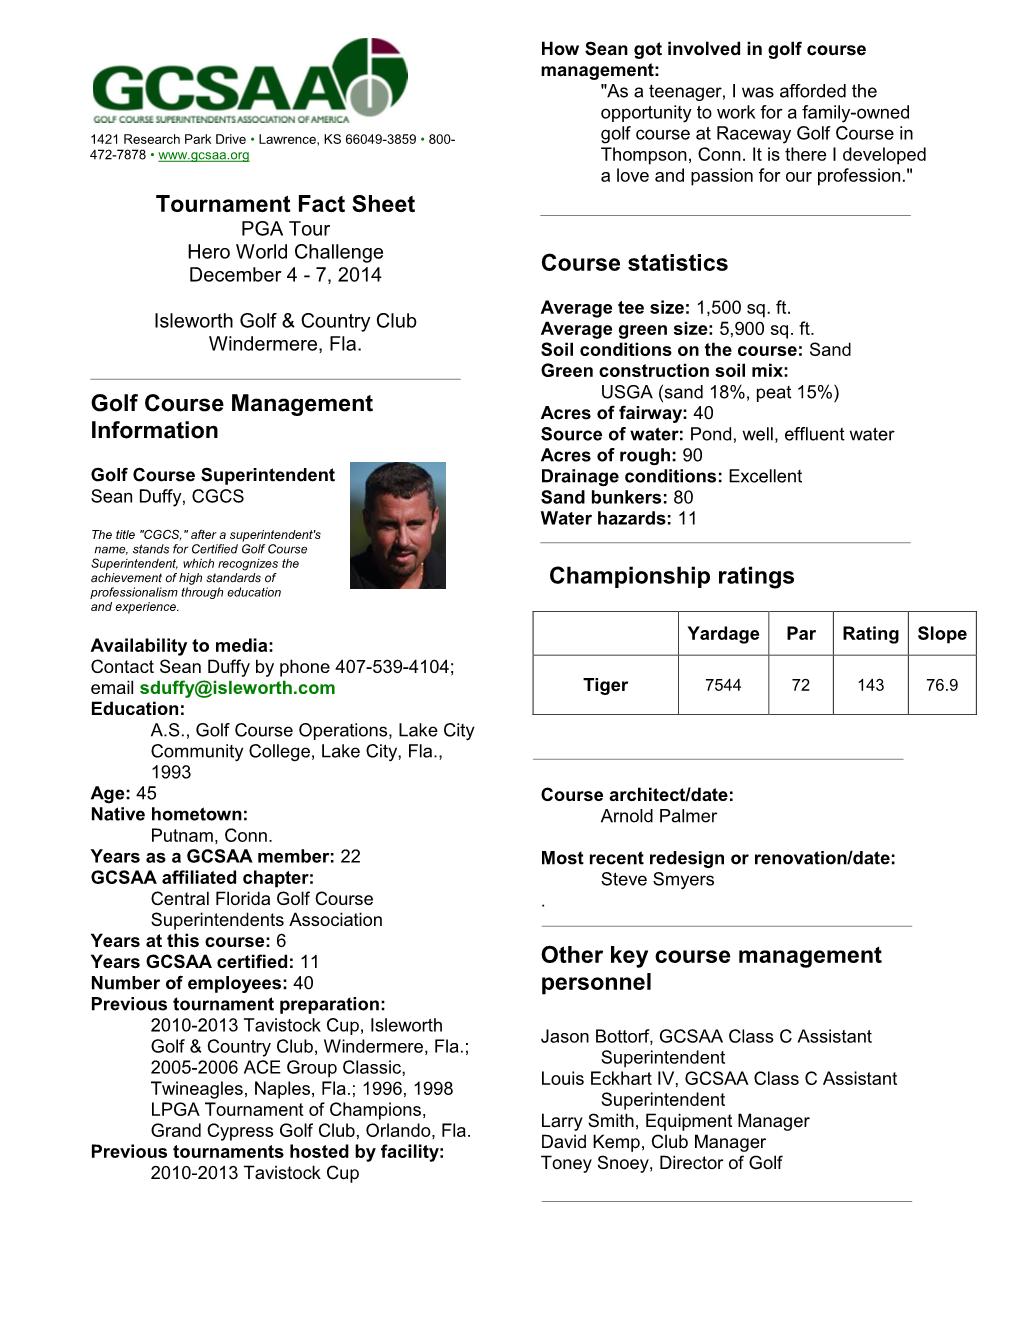 Tournament Fact Sheet Golf Course Management Information Course Statistics Other Key Course Management Personnel Championship Ra